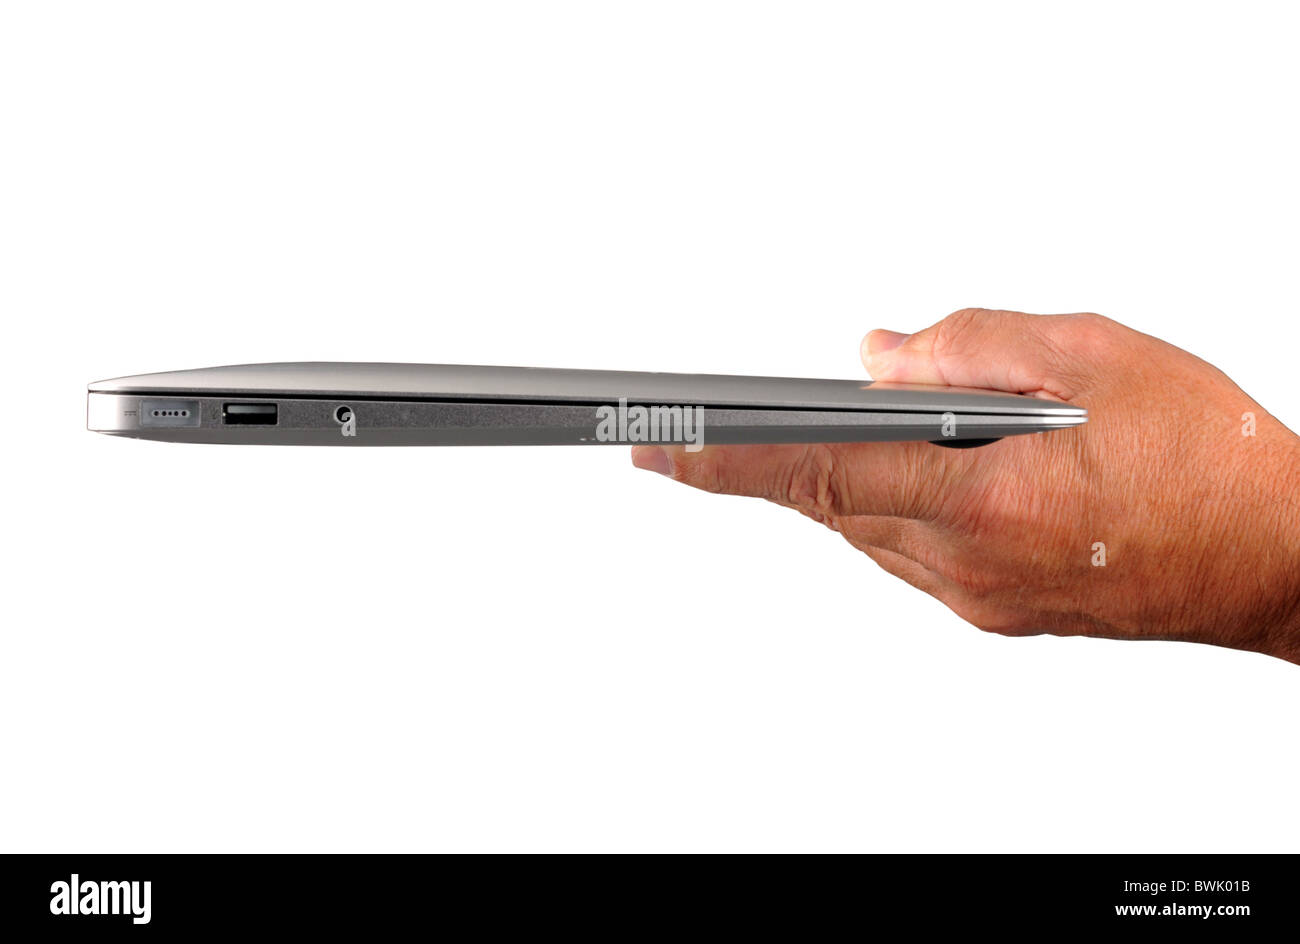 "Macbook Air" macbook laptop computer, the 2010 released "Macbook Air" Stock Photo